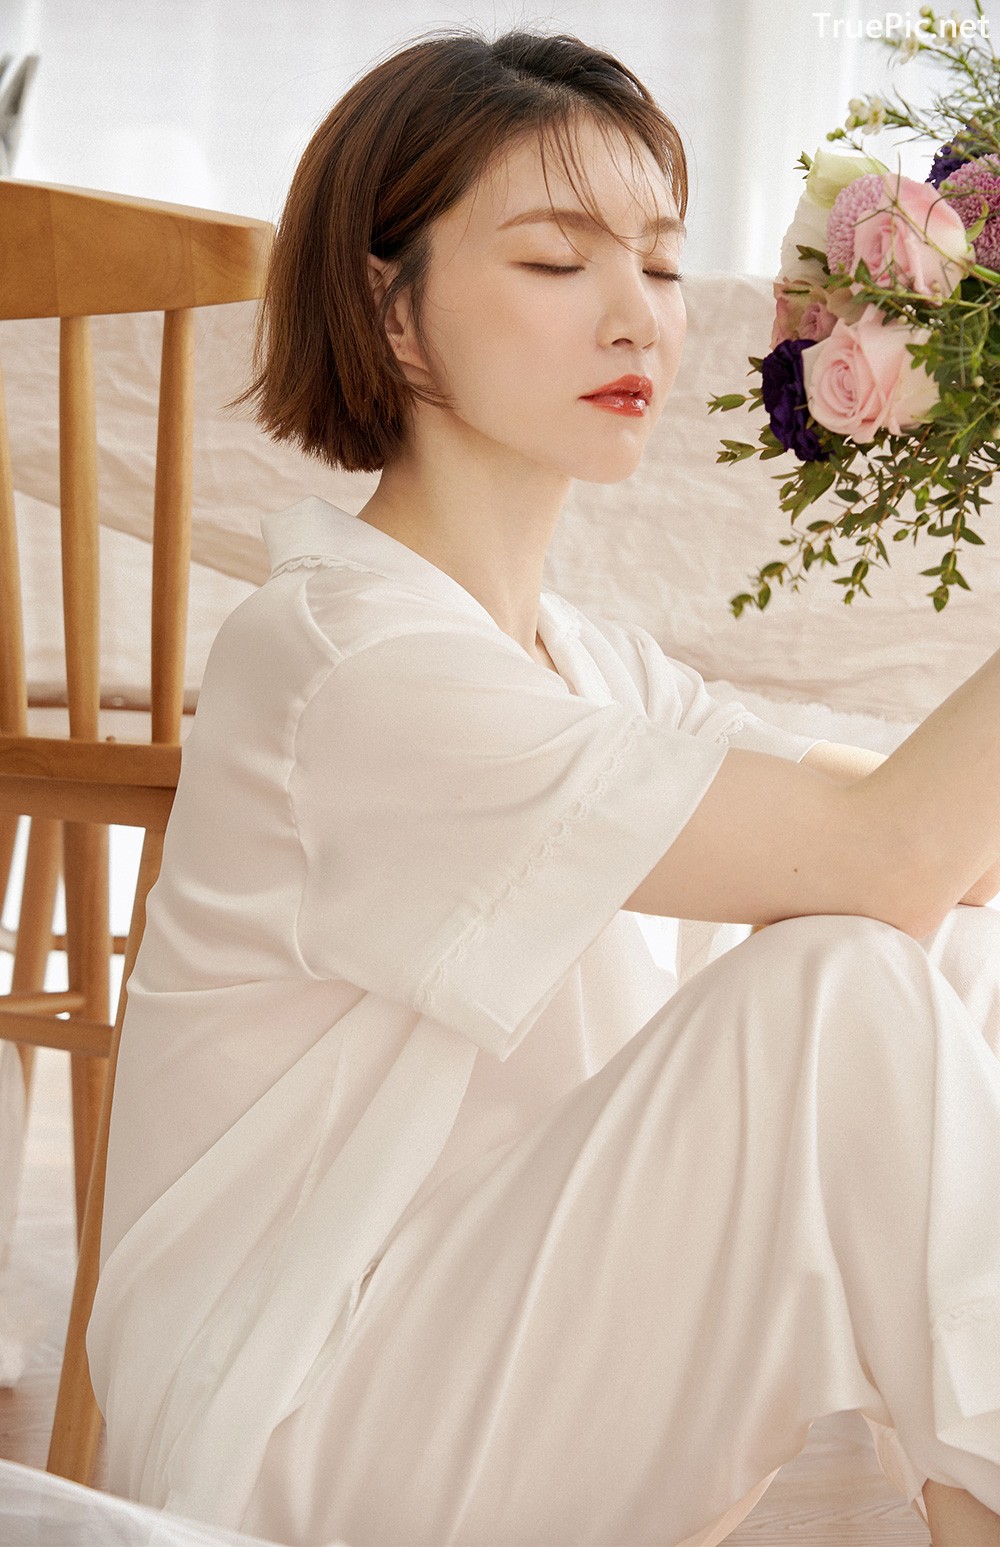 Image Korean Fashion Model Lee Ho Sin - Lingerie Wedding Pure - TruePic.net - Picture-63